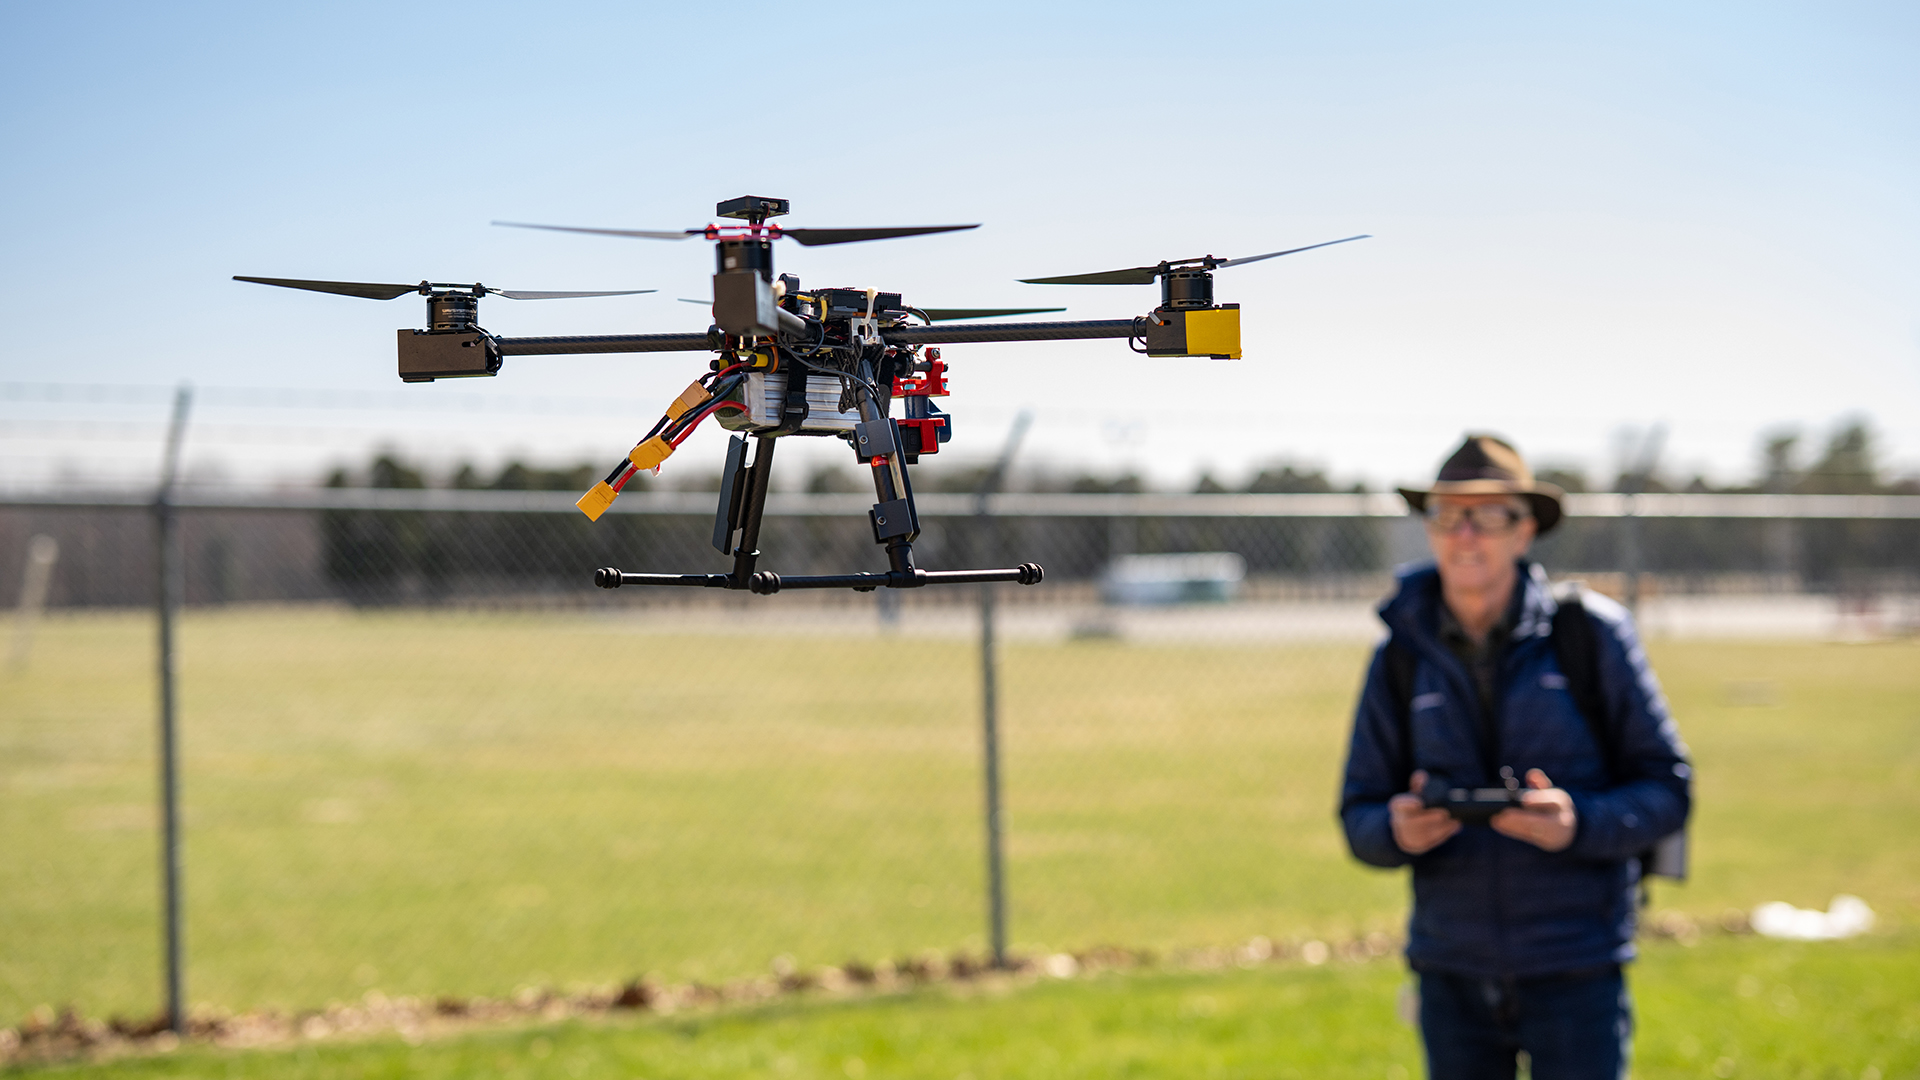 SRI’s AircraftVerse database could unlock more creative drone designs